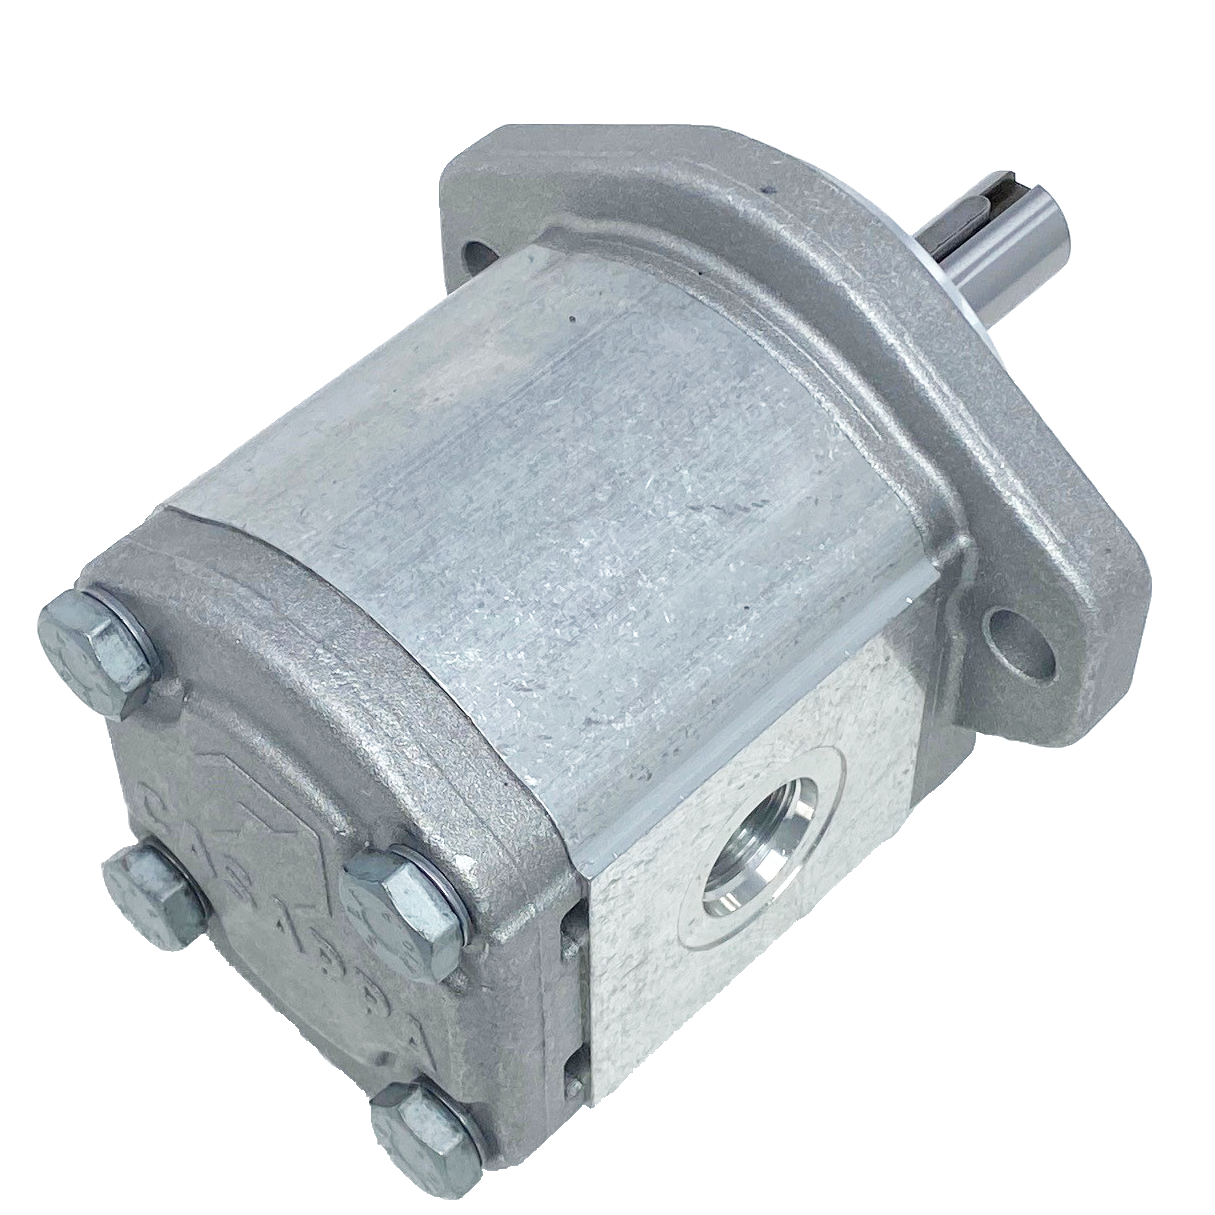 PLM20.16R0-49S1-LOC/OD-N-EL : Casappa Polaris Gear Motor, 16.85cc, 3625psi Rated, 3000RPM, Reversible Rear External Drain, 3/4" Bore x 3/16" Key Shaft, SAE A 2-Bolt Flange, 0.625 (5/8") #10 SAE Inlet, 0.75 (3/4") #12 SAE Outlet, Aluminum Body & Flange